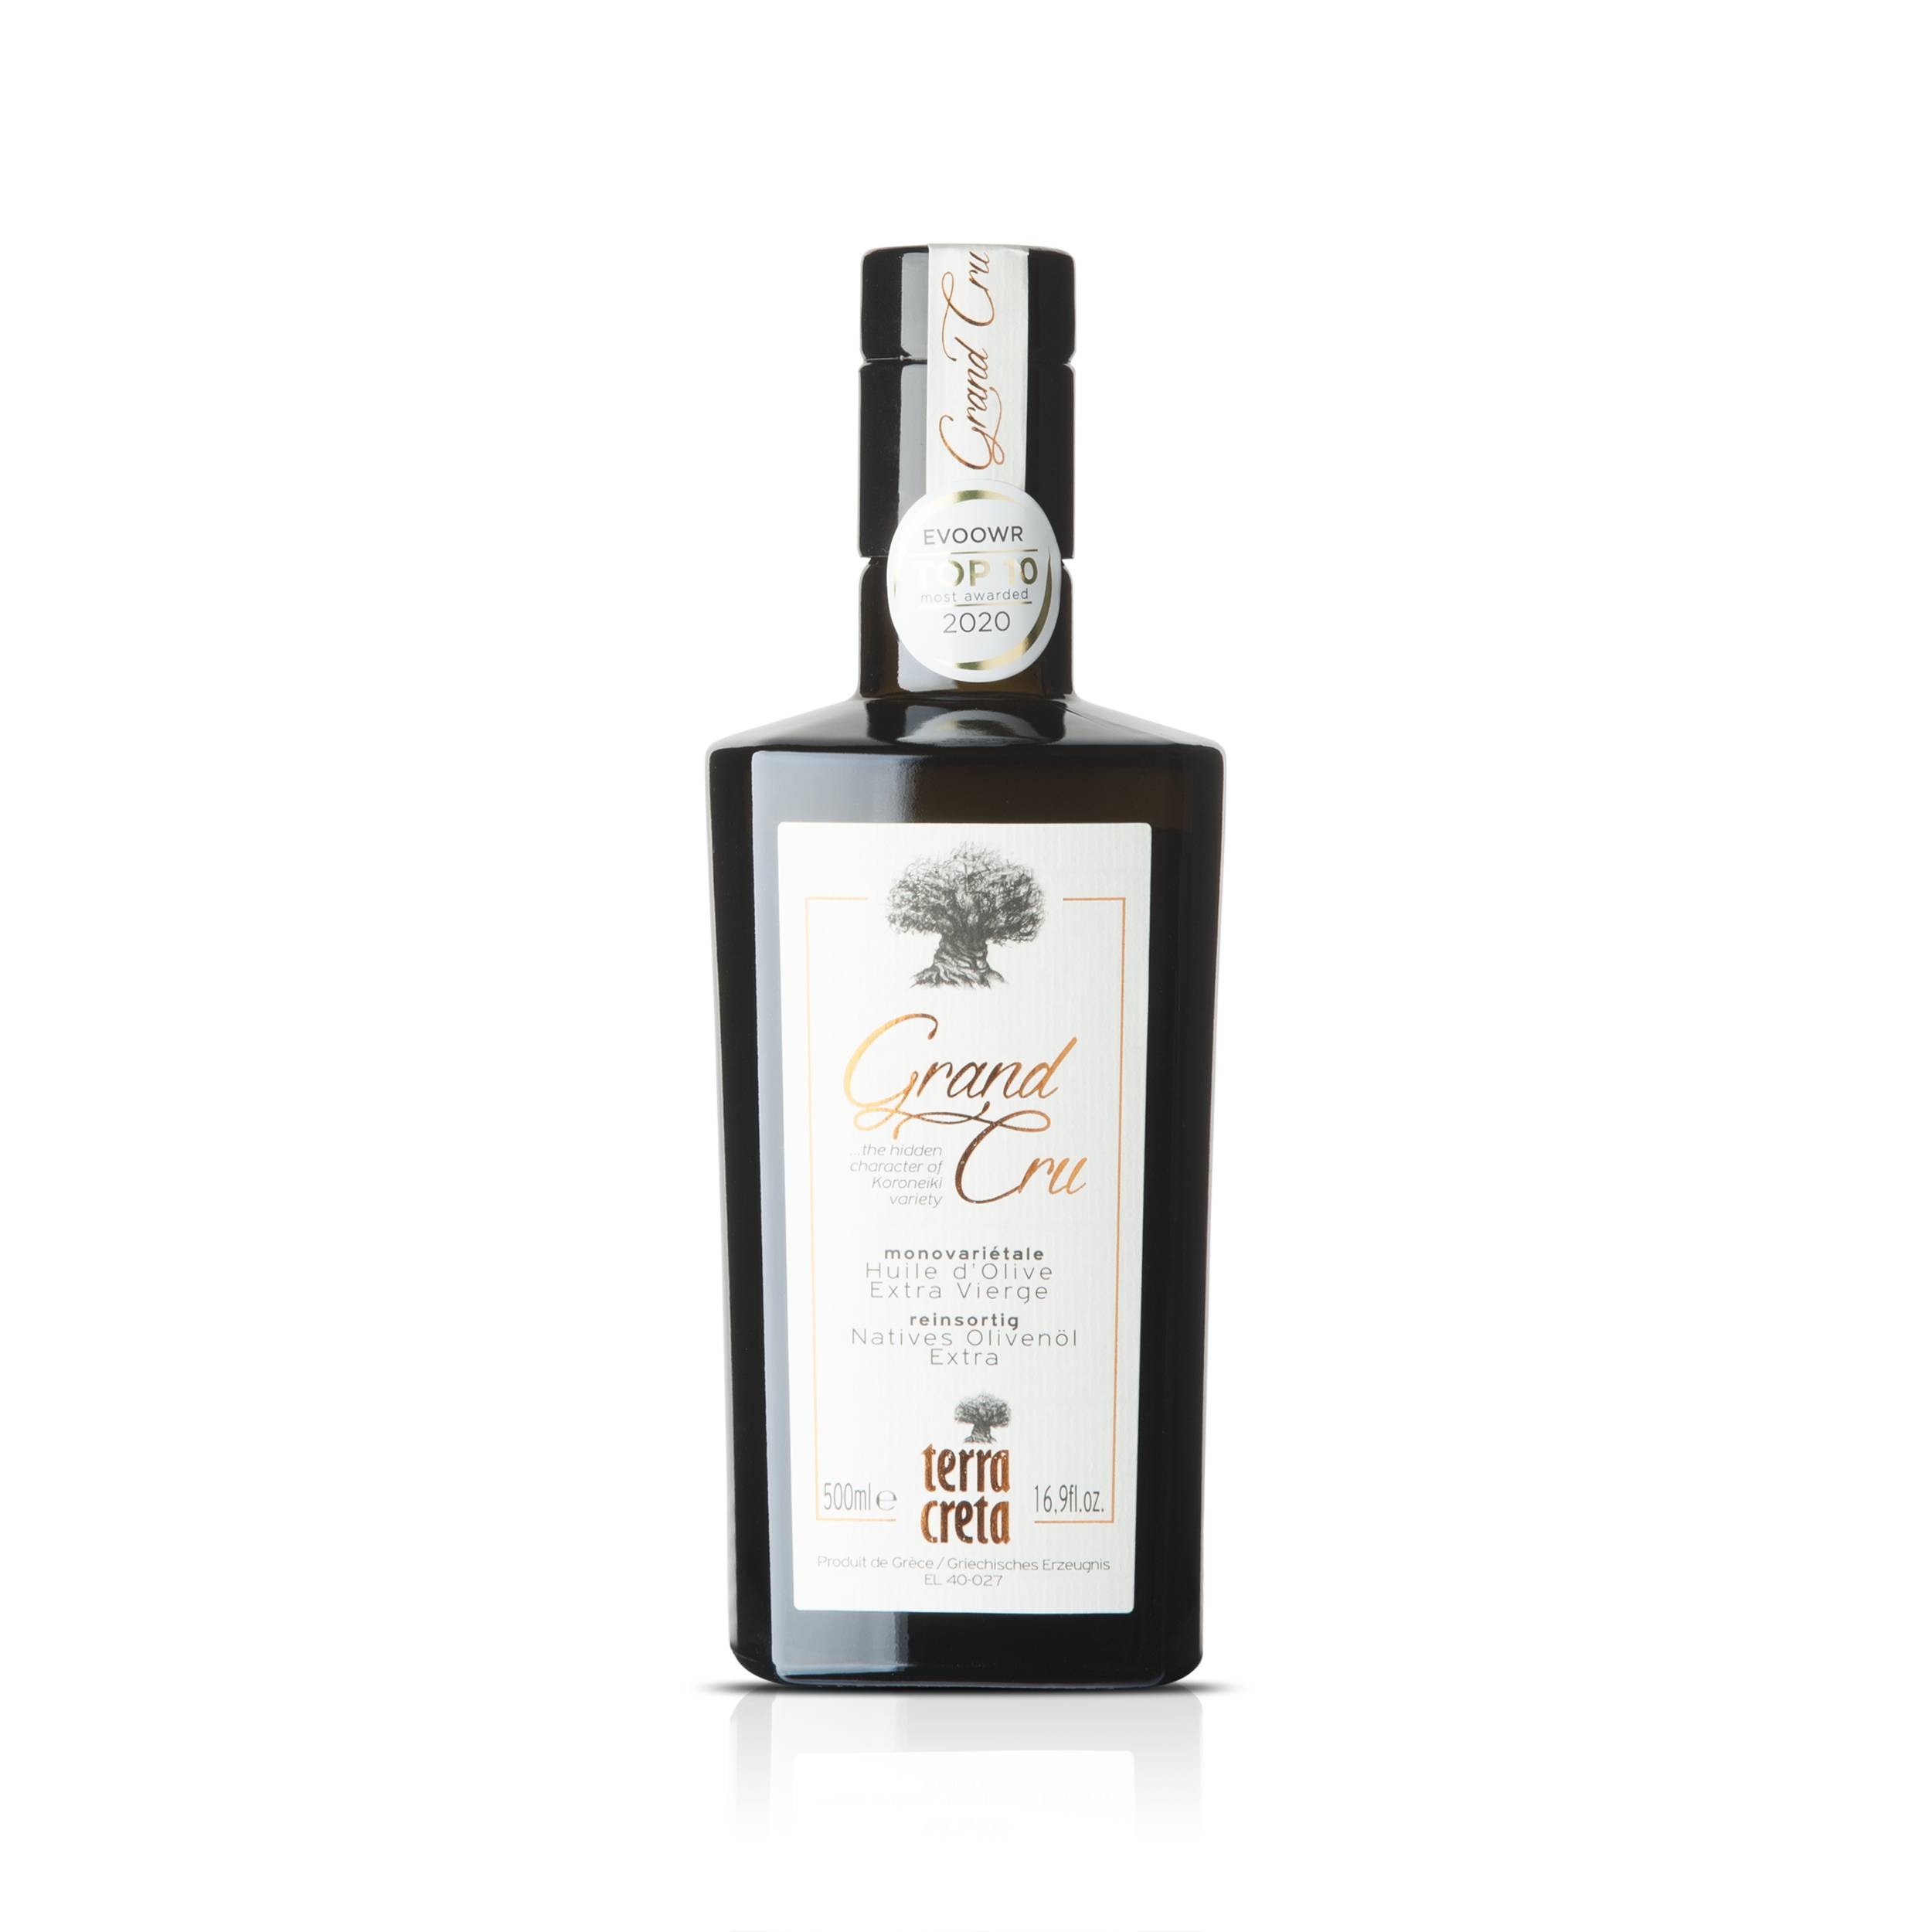 Terra Creta - Grand Cru - 500ml - weltbestes Olivenöl 2021 - Mario Solinas